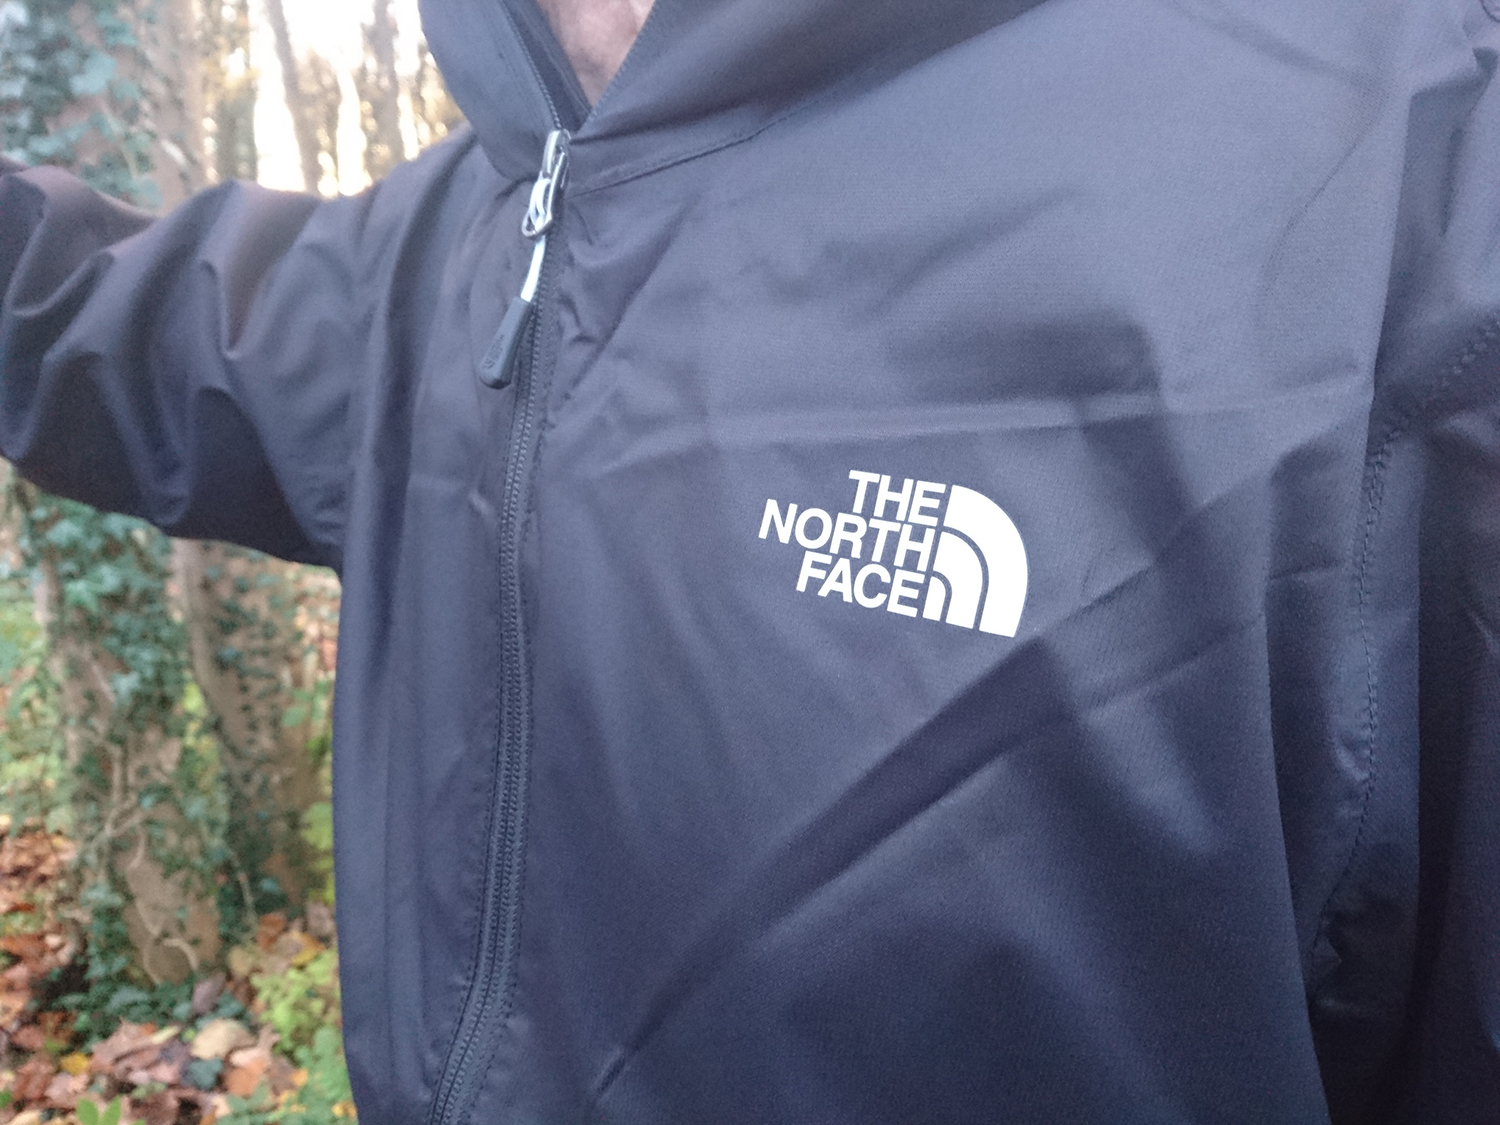 servet Verpletteren barsten GEAR | The North Face Men's Quest Jacket Black from Etrias